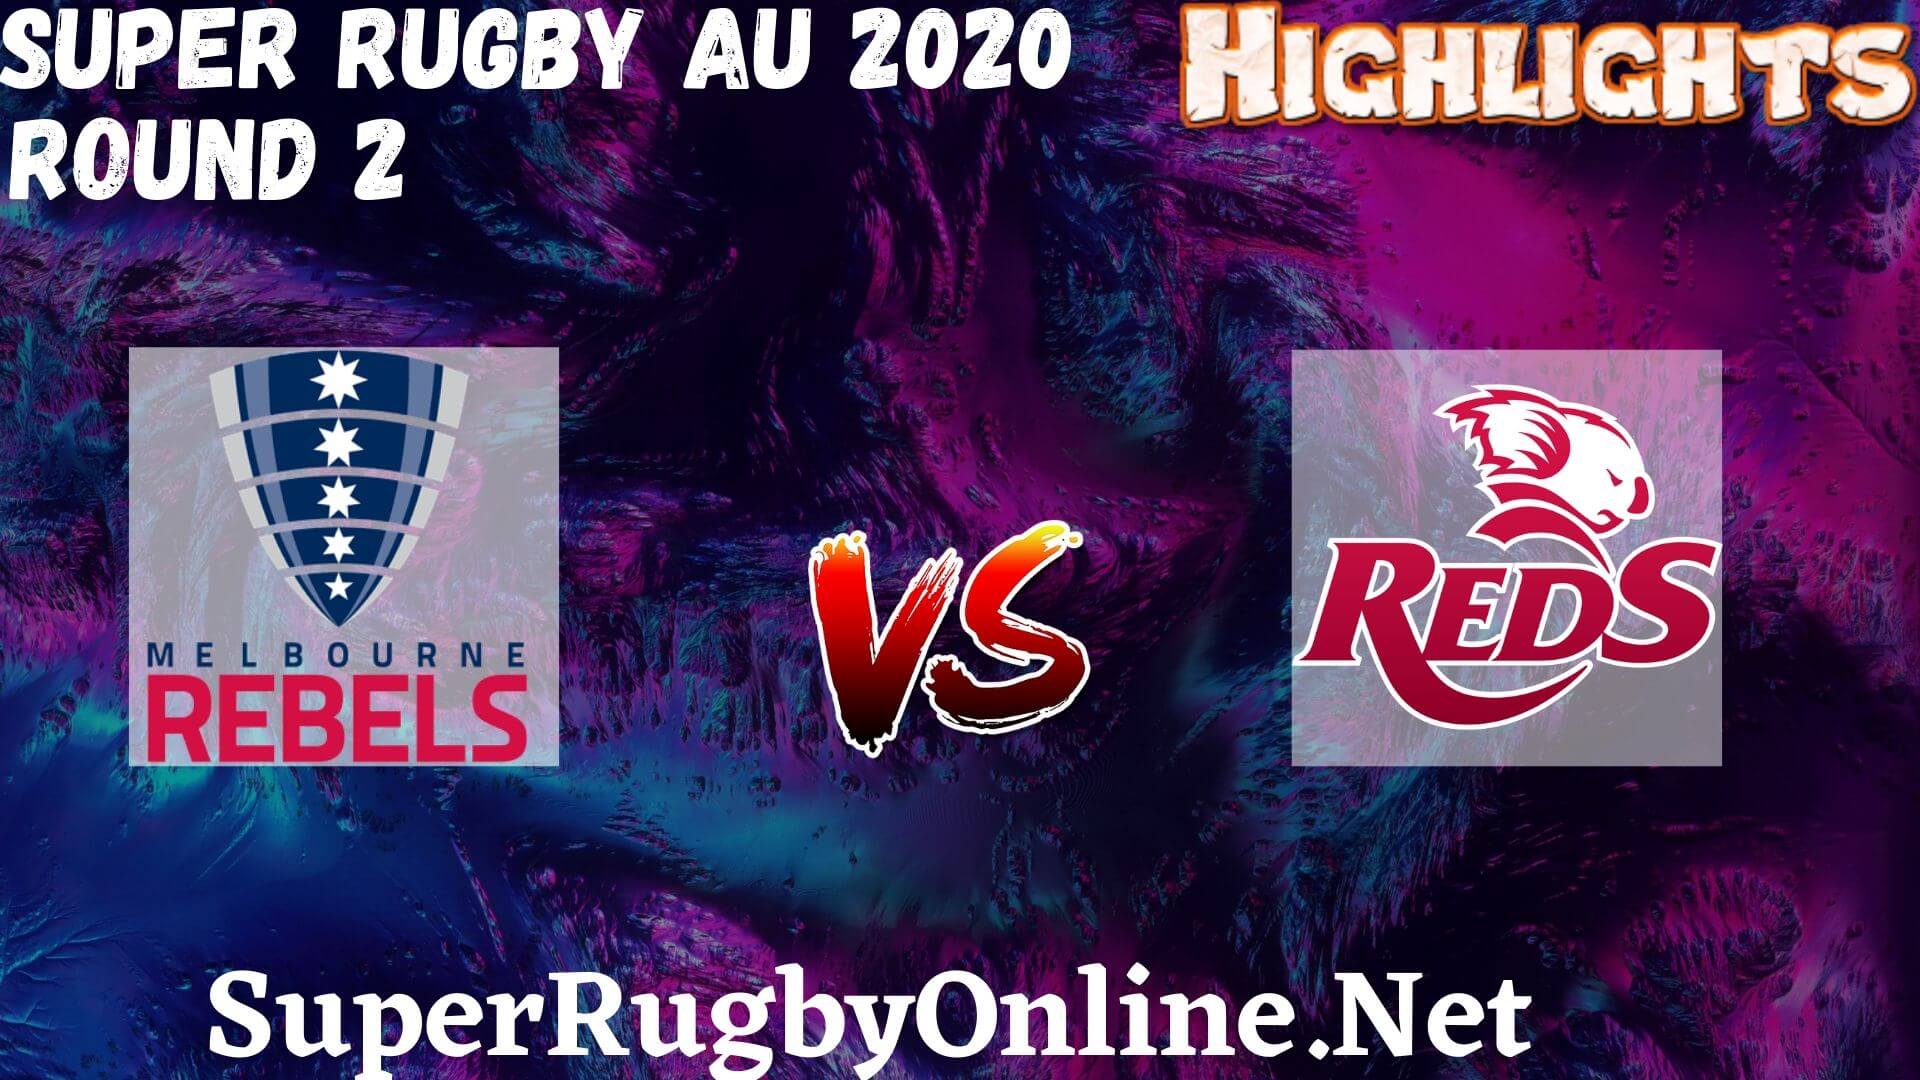 Rebels Vs Reds Rd 2 Highlights 2020 Super Rugby Au